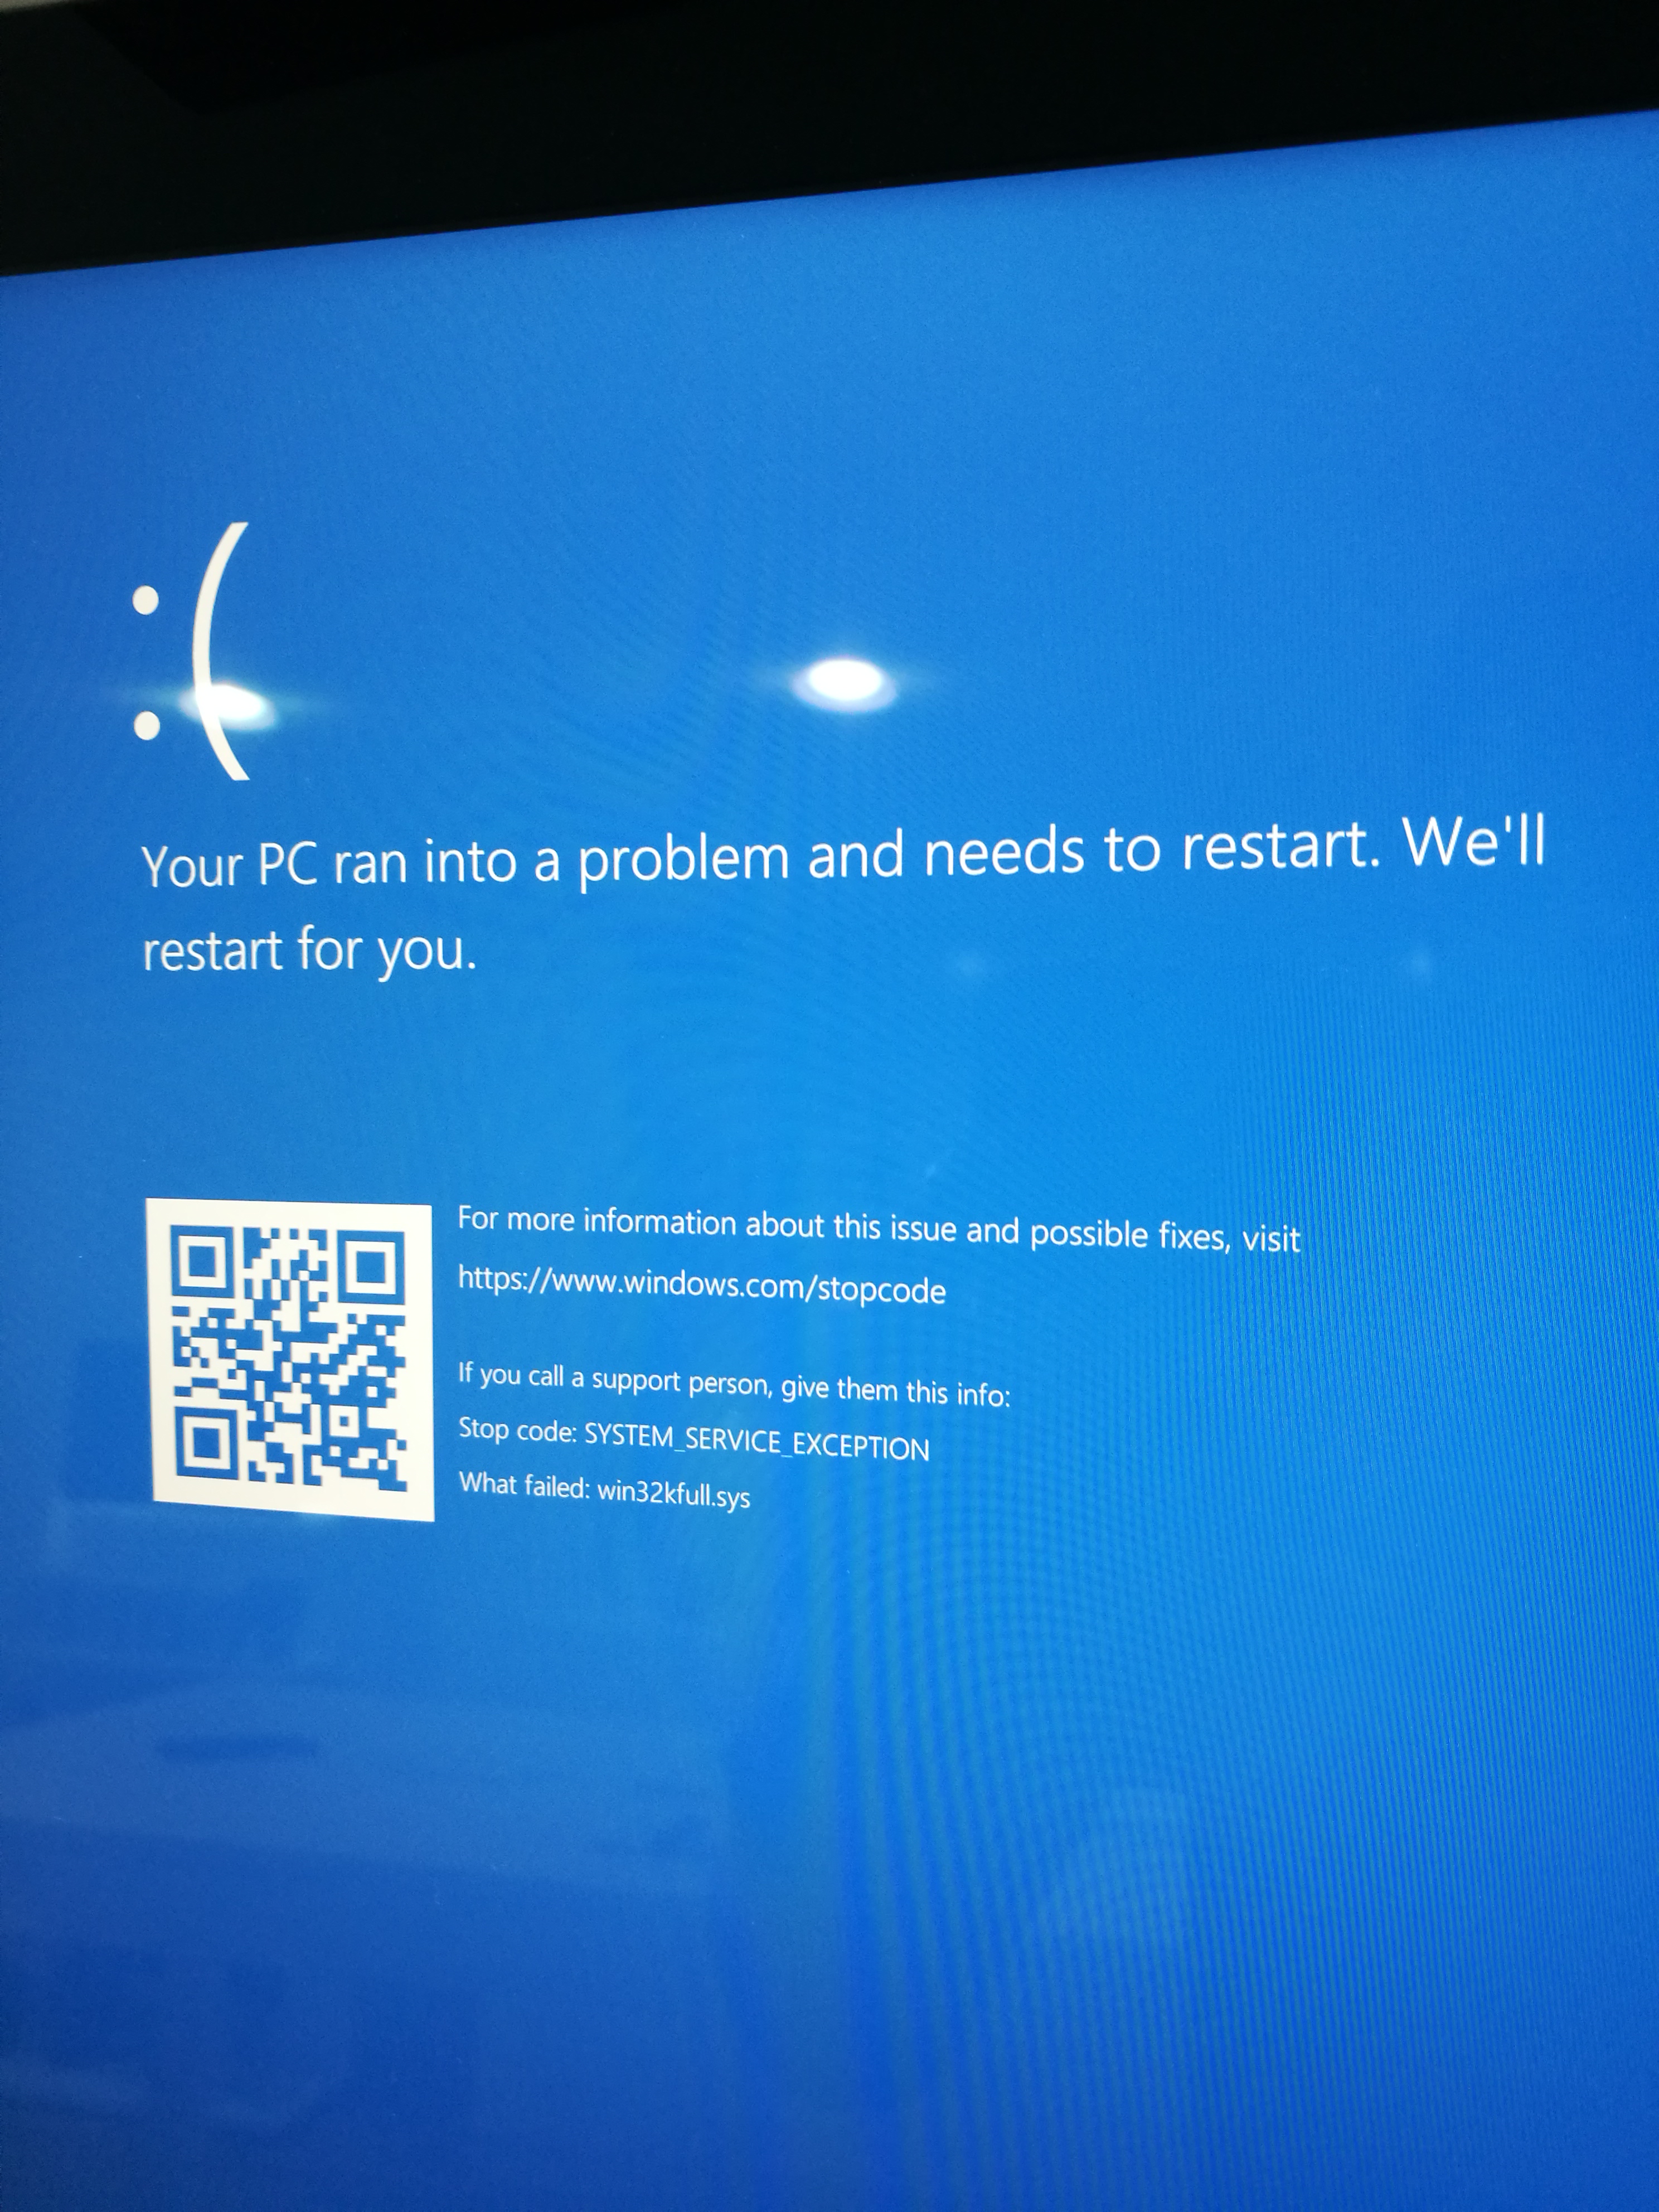 Imac to windows 10 boot problem, - Microsoft Community